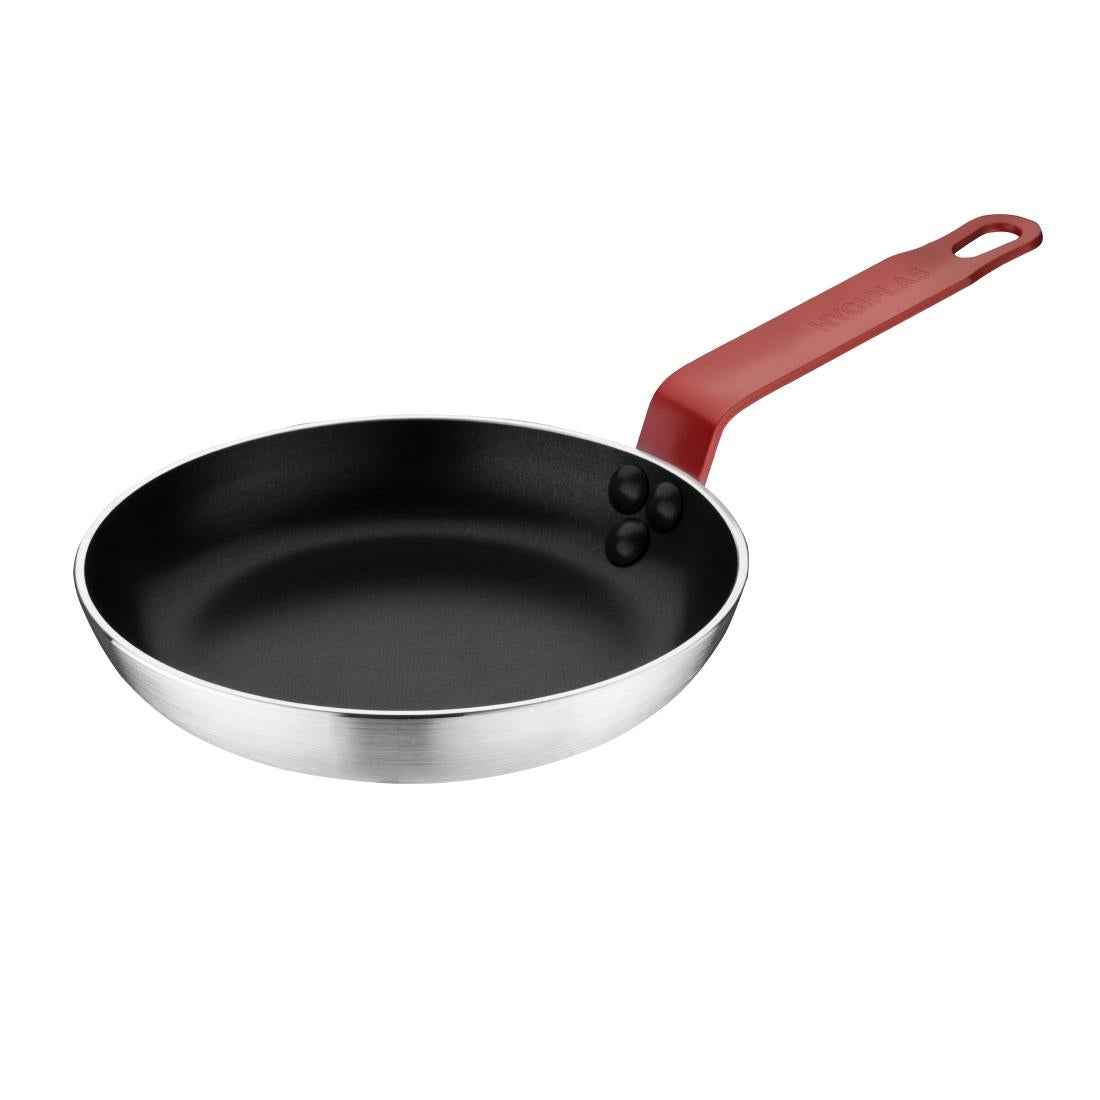 Hygiplas Aluminium Non-Stick Teflon Platinum Plus Frying Pan with Red Handle 20cm